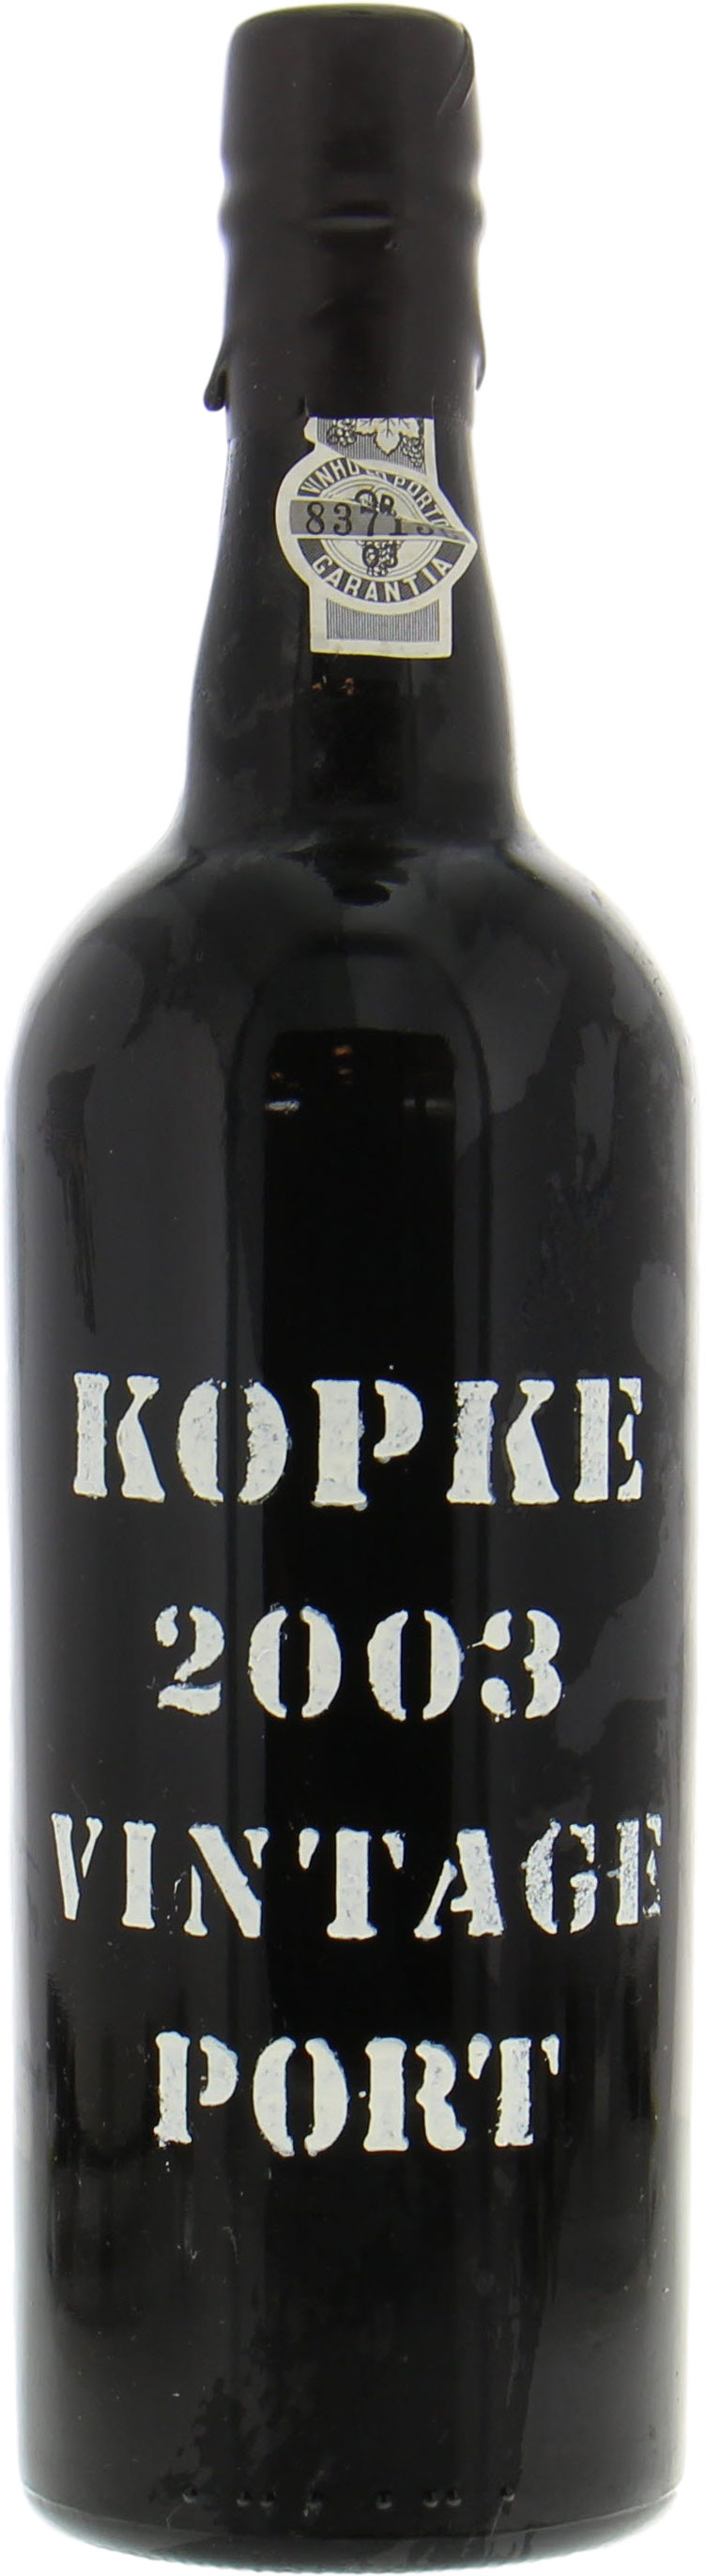 Kopke - Vintage Port 2003 Perfect